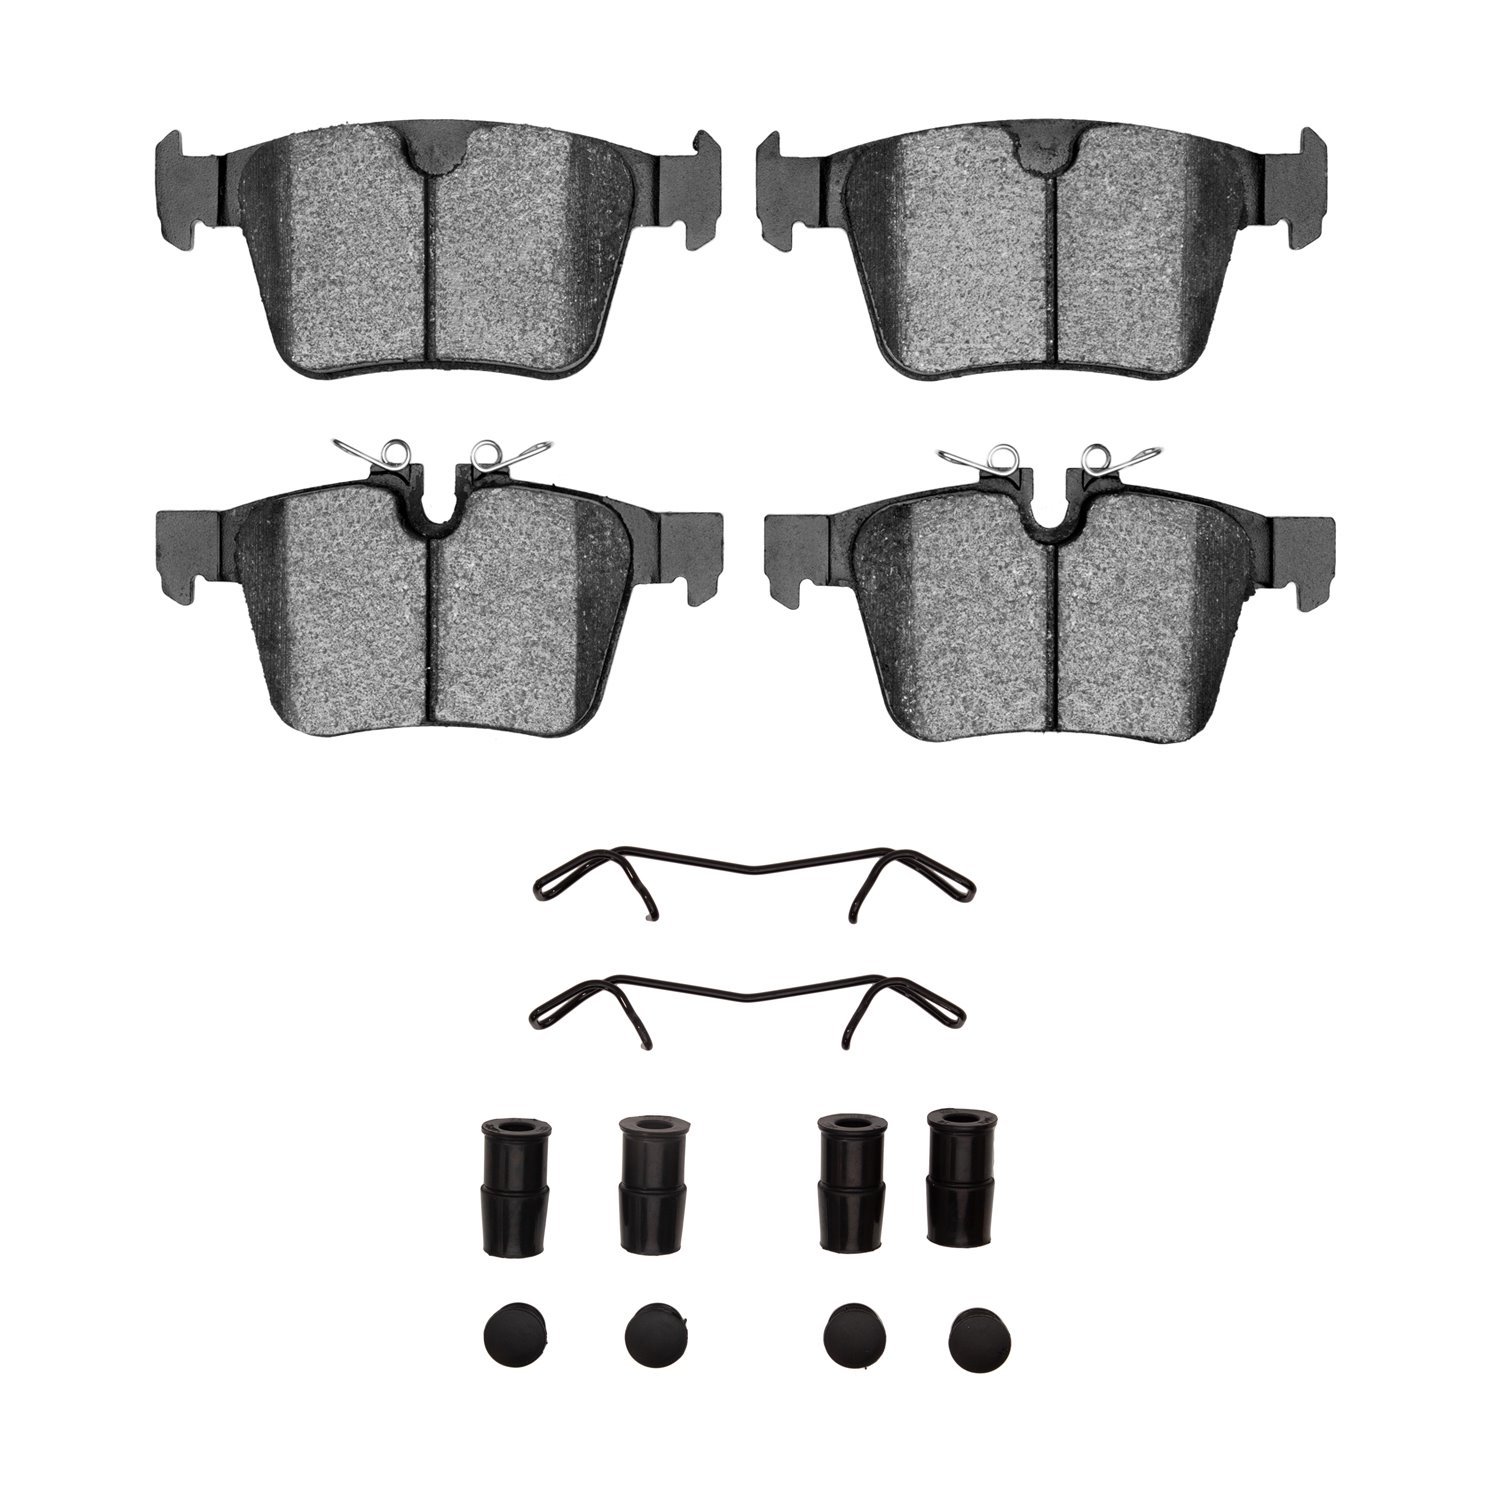 1551-1821-01 5000 Advanced Ceramic Brake Pads & Hardware Kit, Fits Select Multiple Makes/Models, Position: Rear